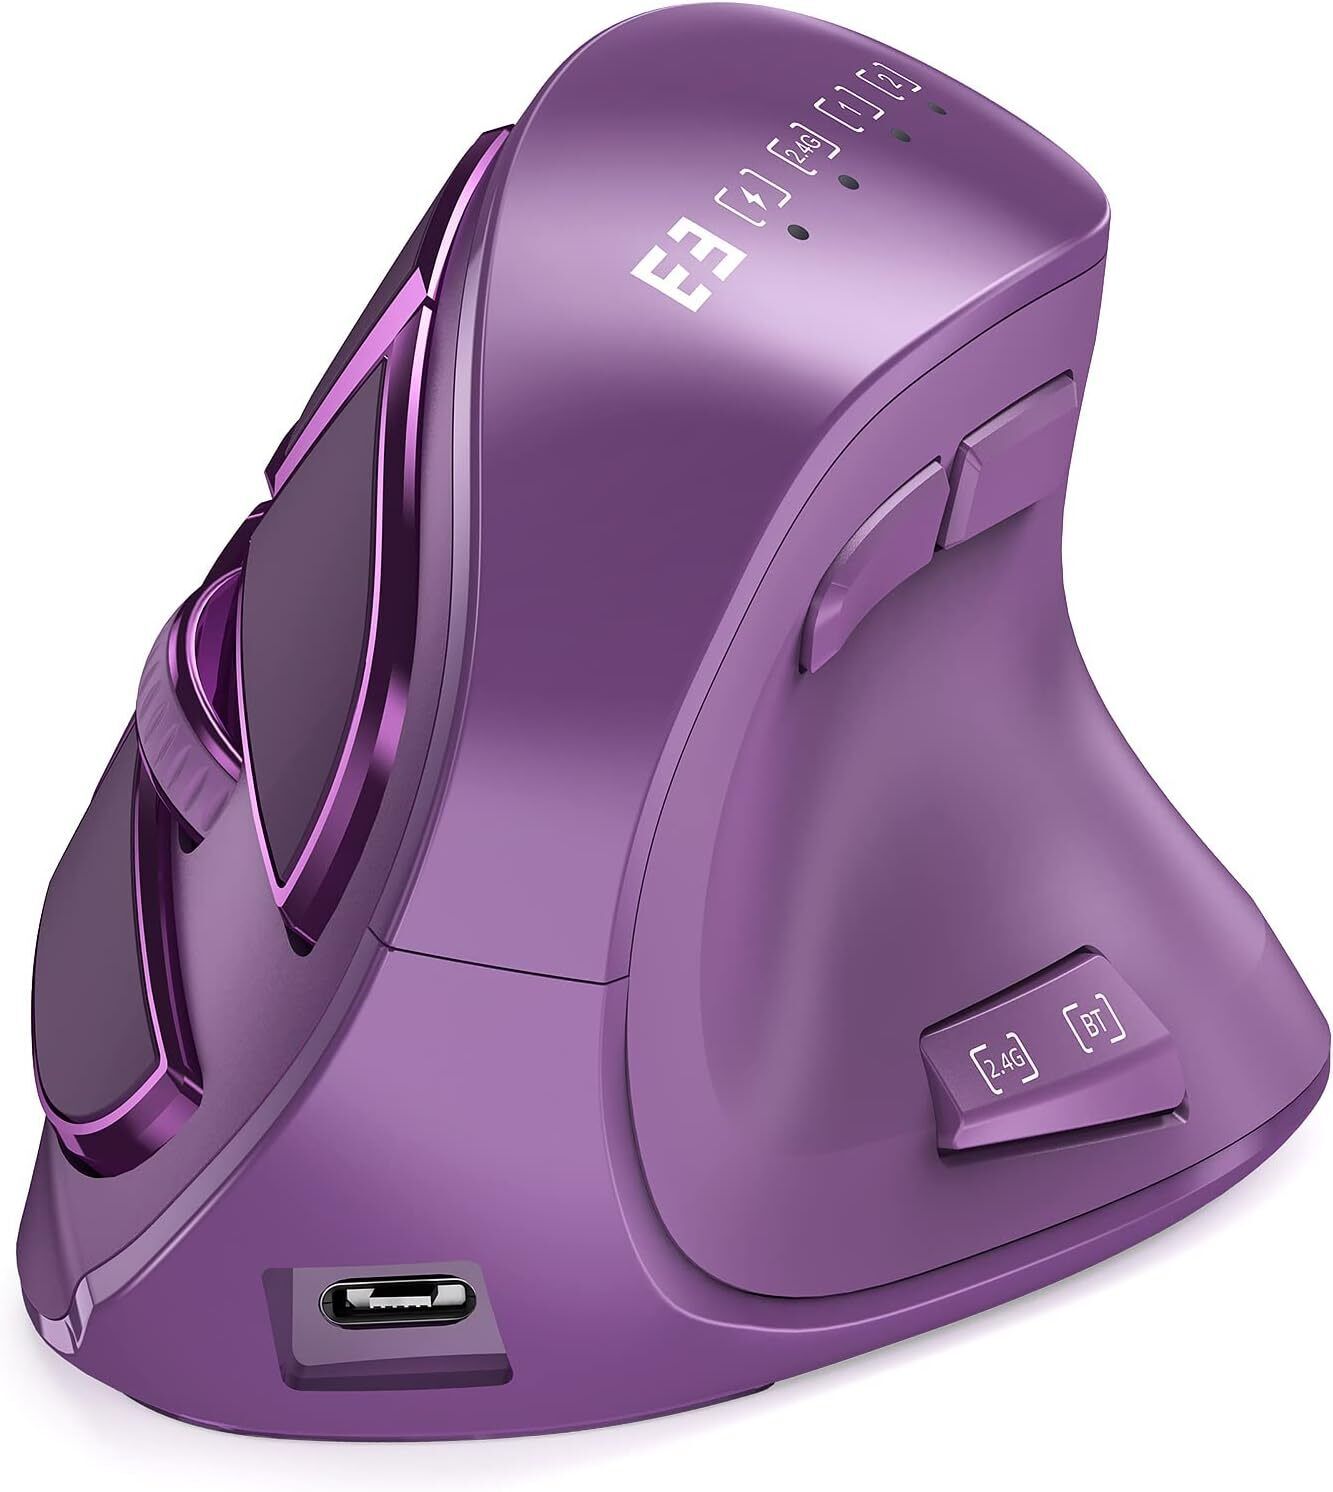 Seenda Wireless Vertical Ergonomic Mouse-Purple (2 BT) MAC & PC - Bluetooth Only